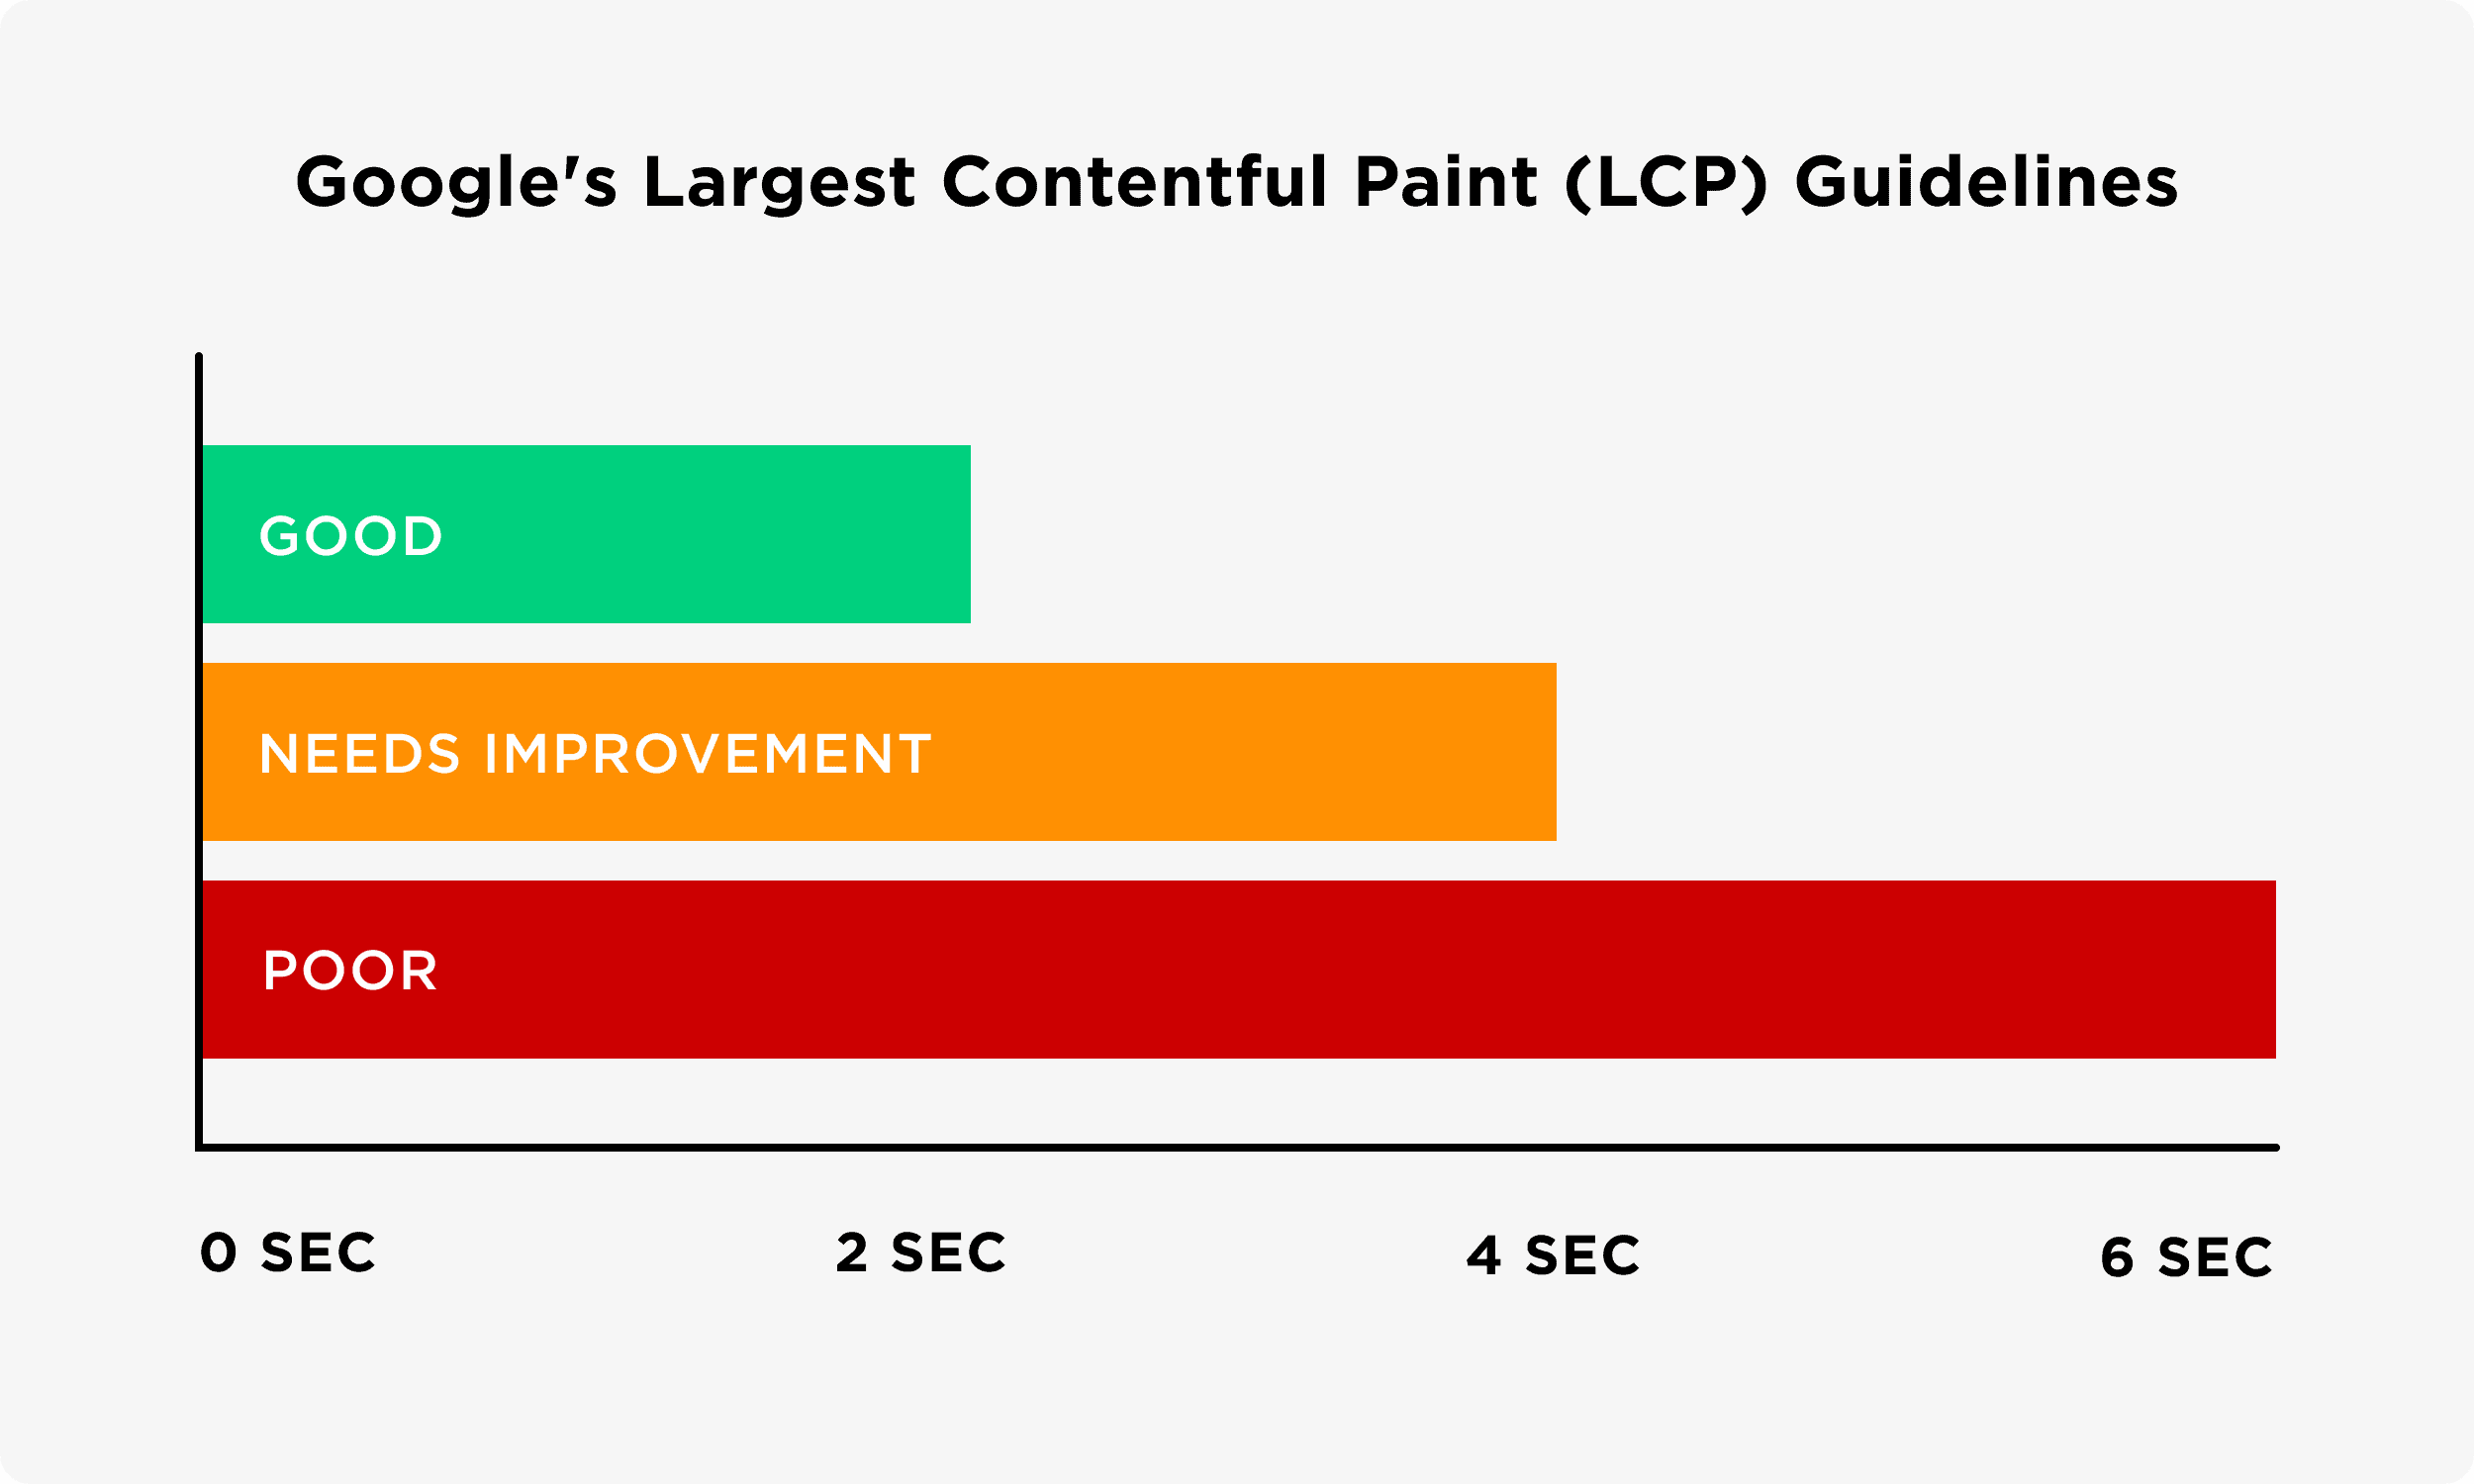 Google's largest contentful paint guidelines